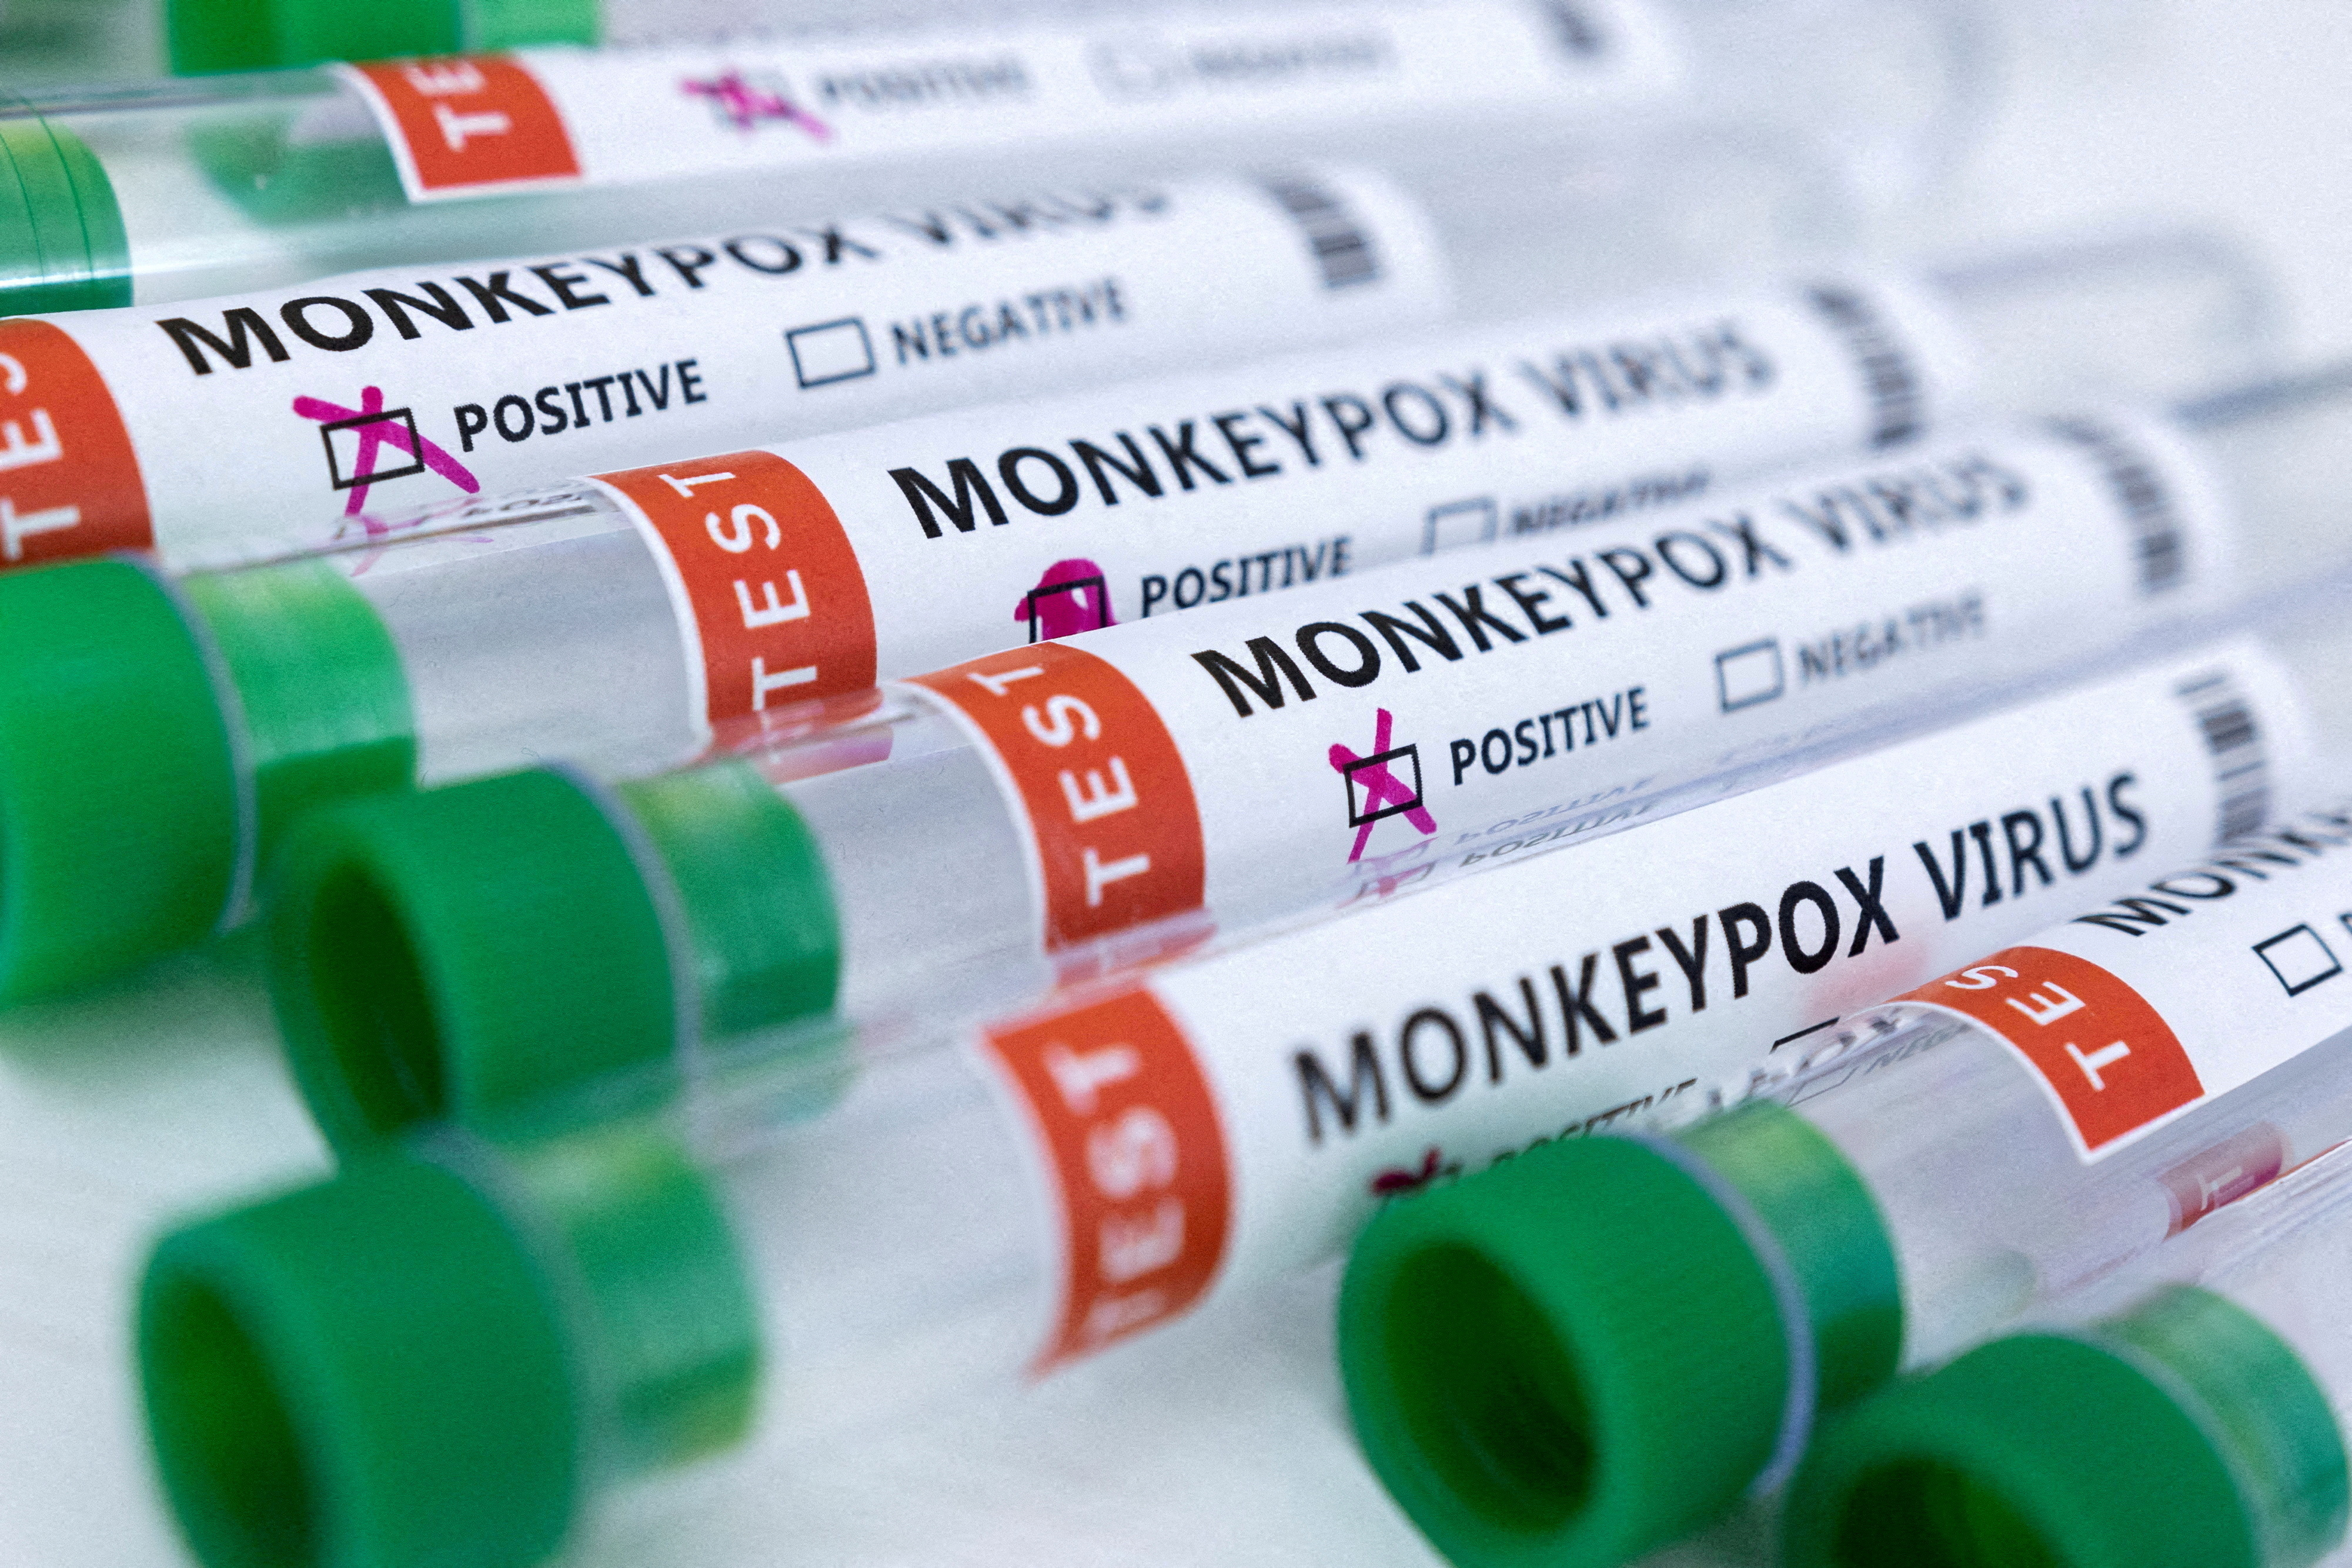 Illustration shows test tubes labelled "Monkeypox virus positive and negative"